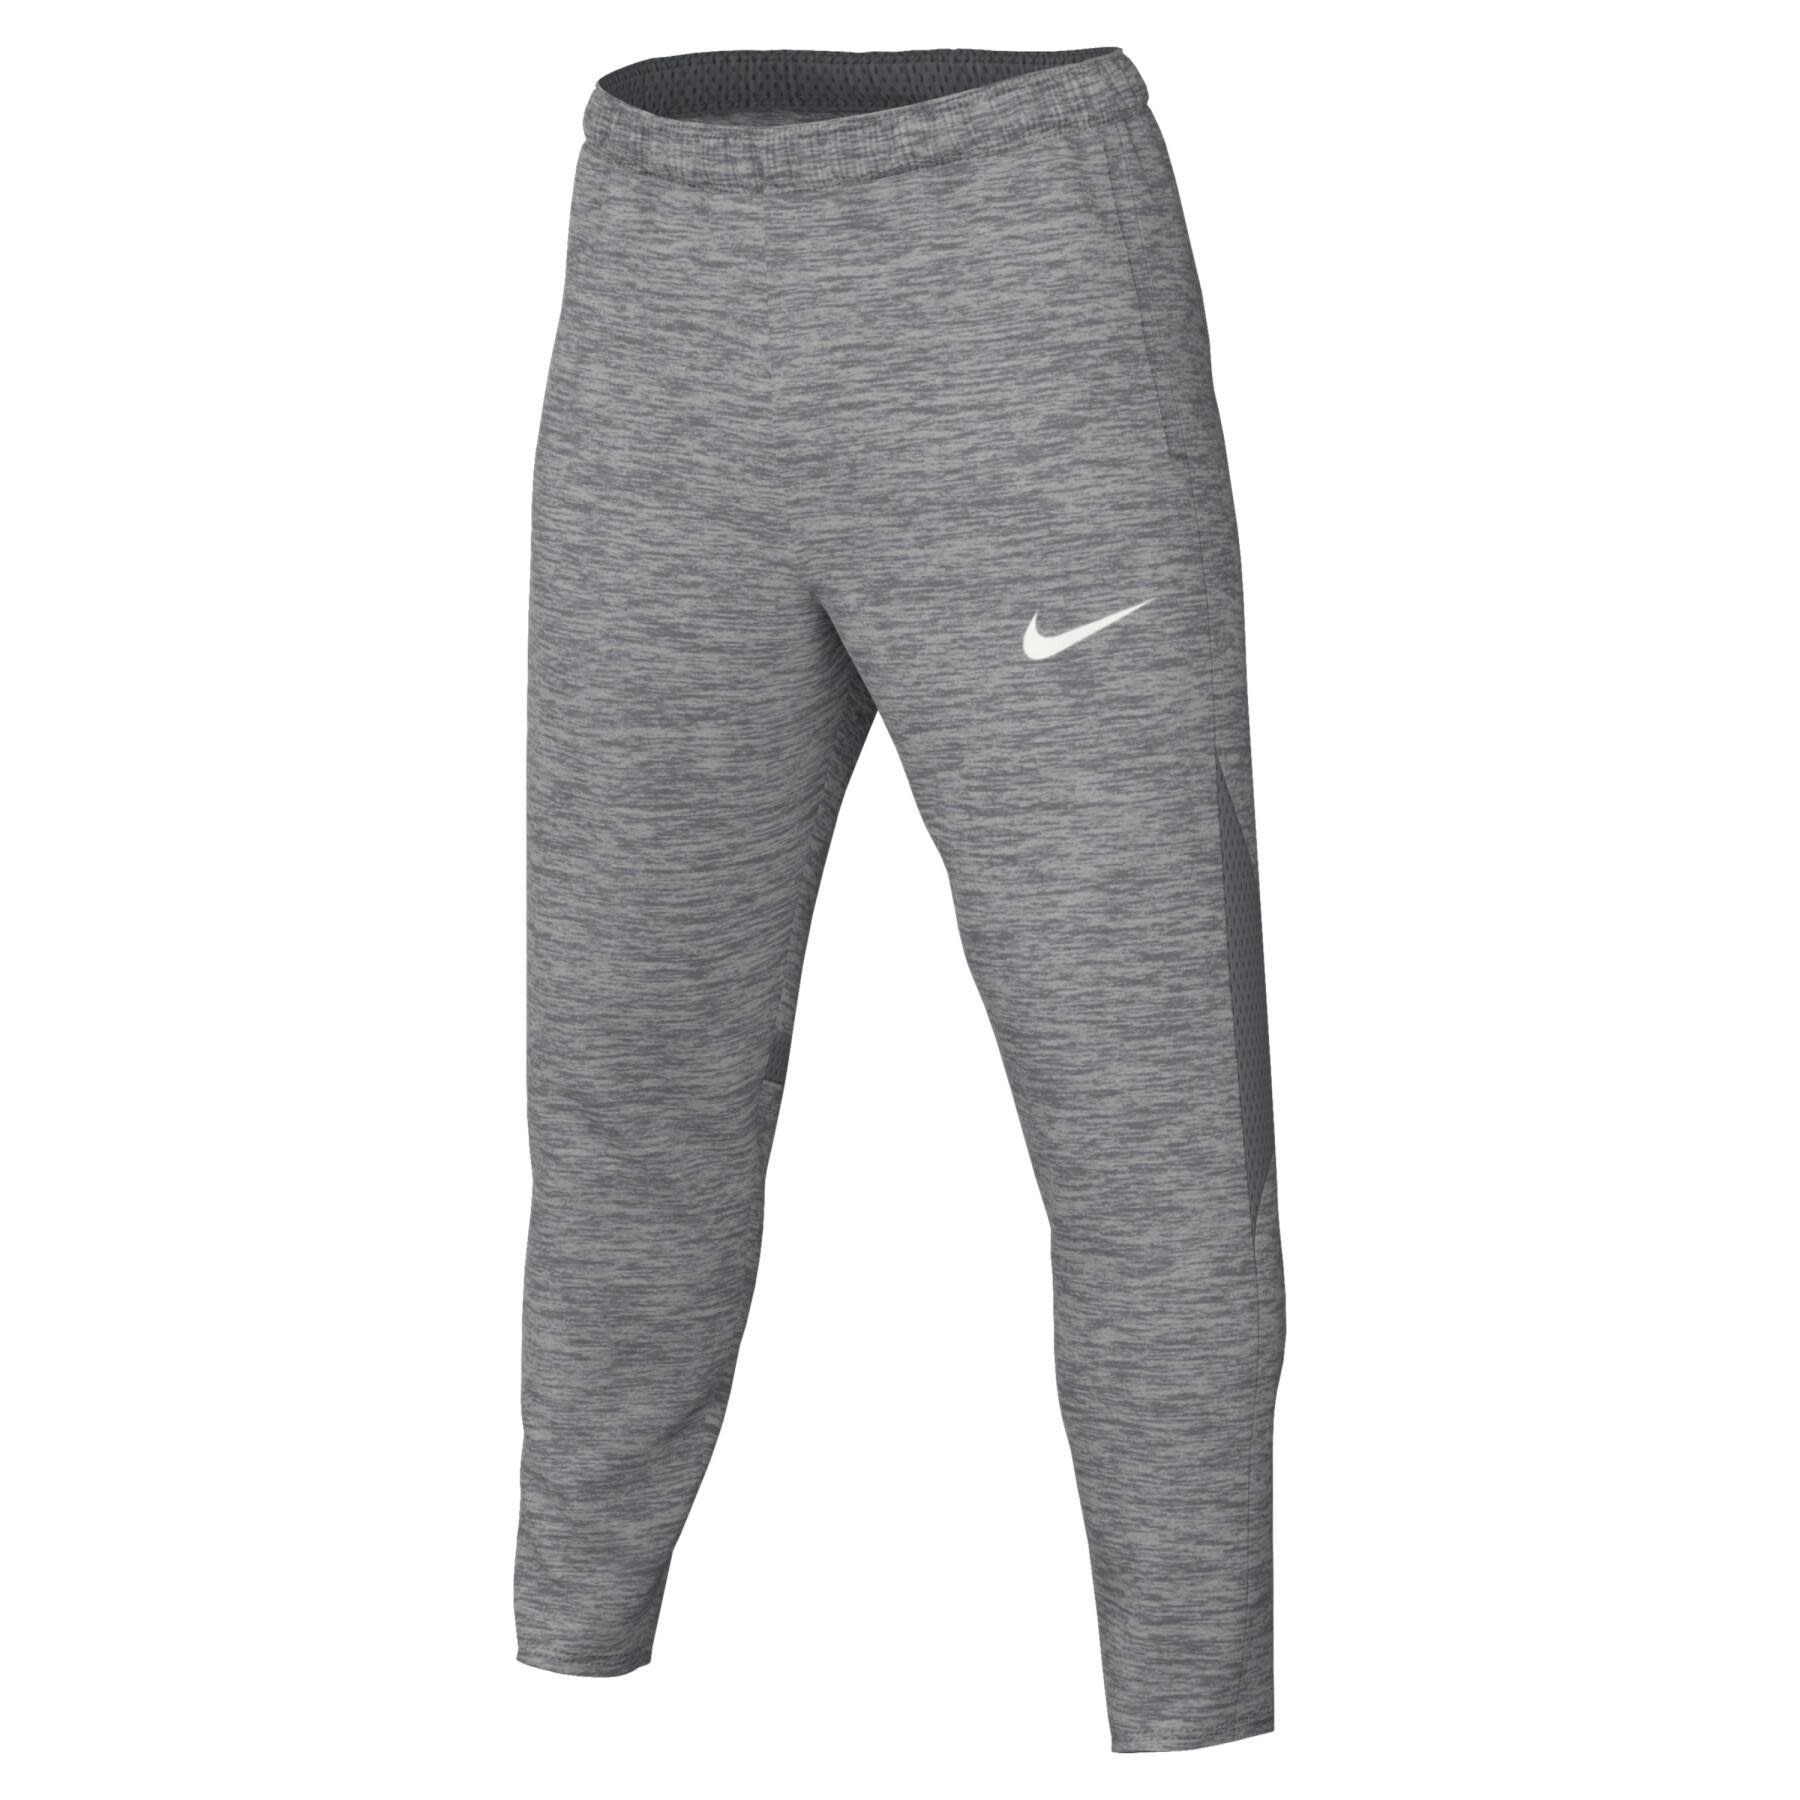 Women's Nike Academy Pant - Gray